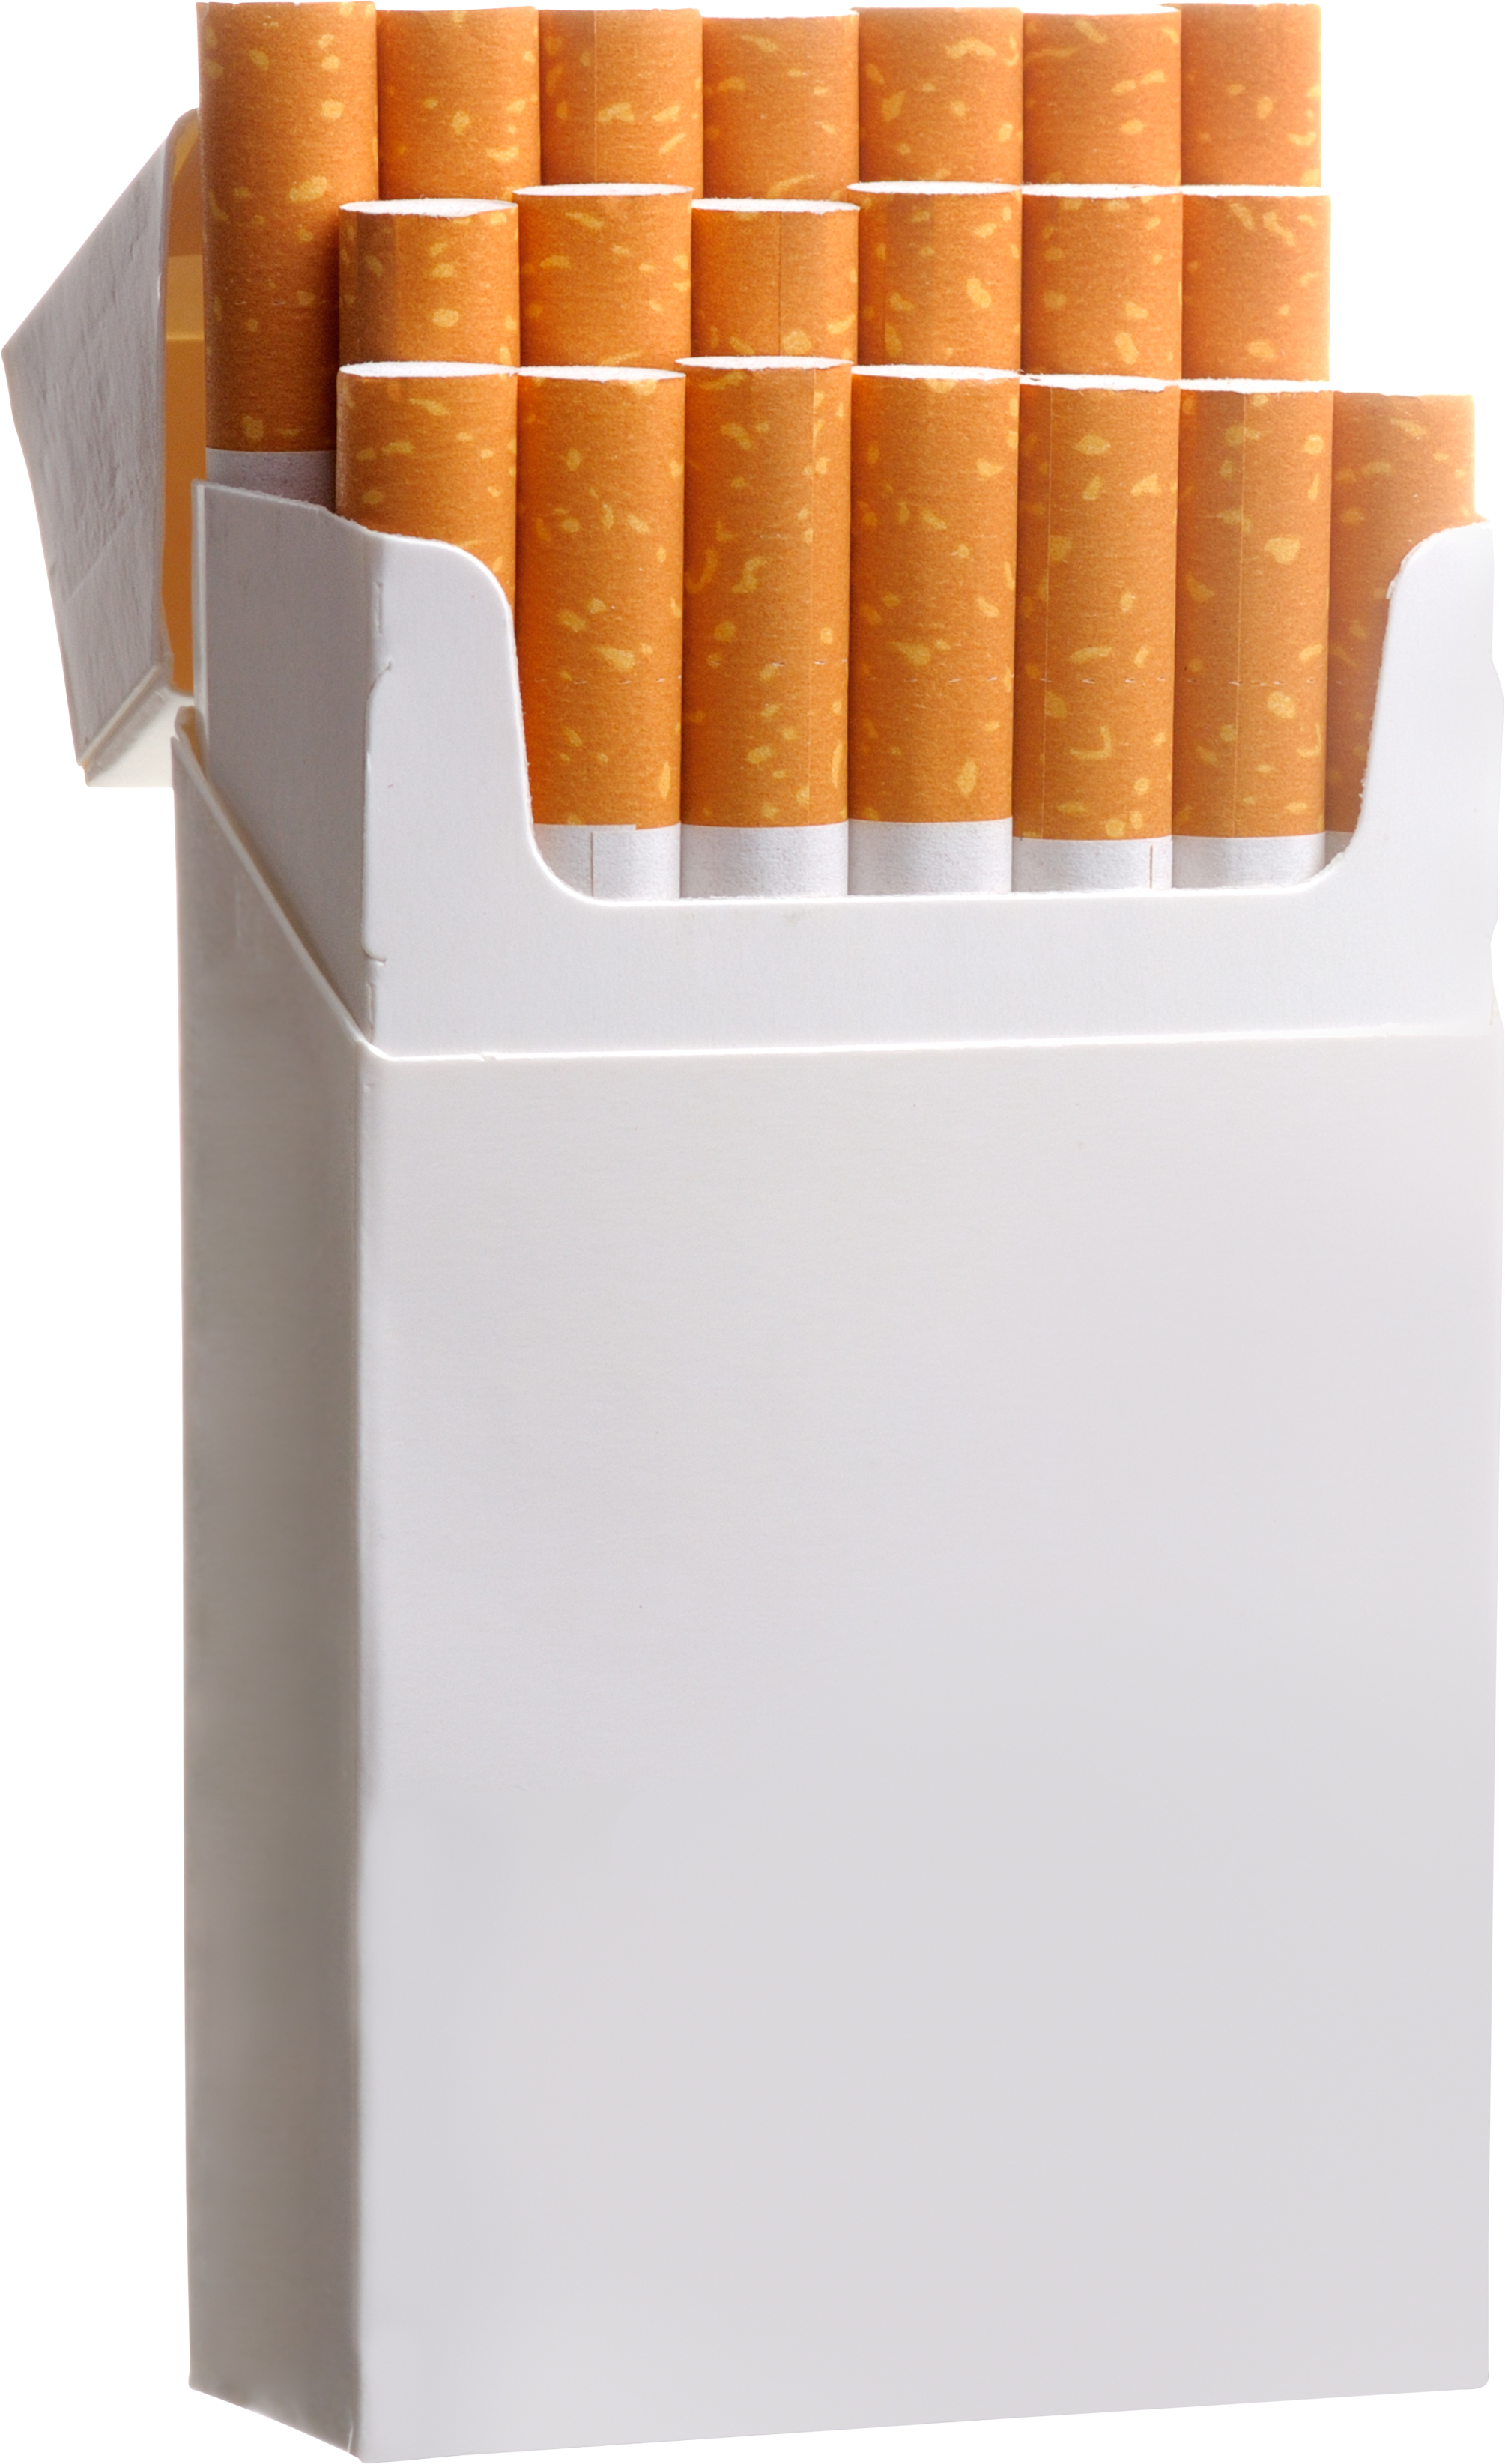 Cigarette pack PNG image transparent image download, size: 2009x3289px